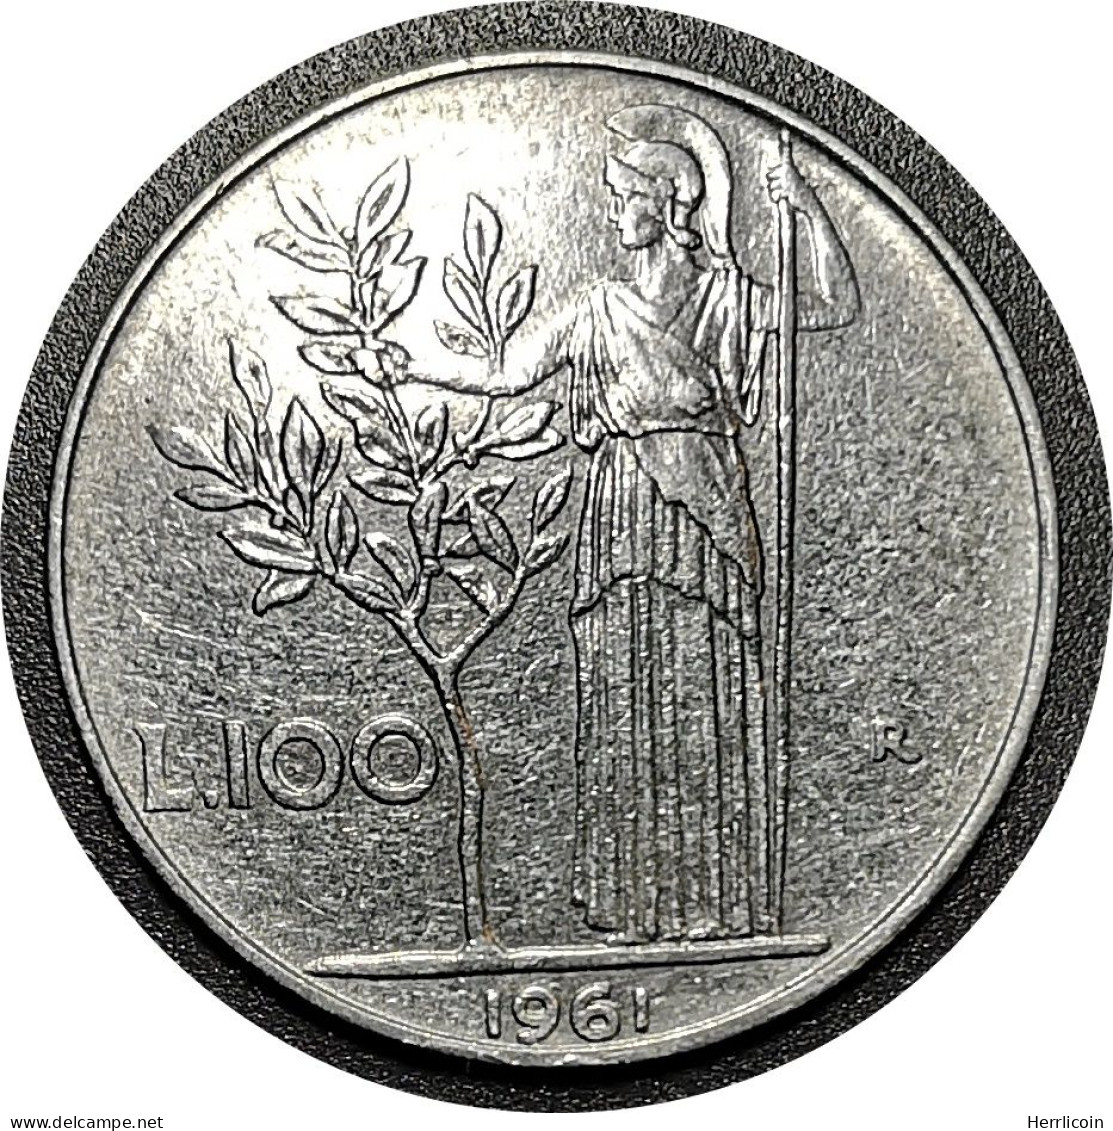 1961 - 100 Lire - Italie [KM#96.1] - 100 Lire